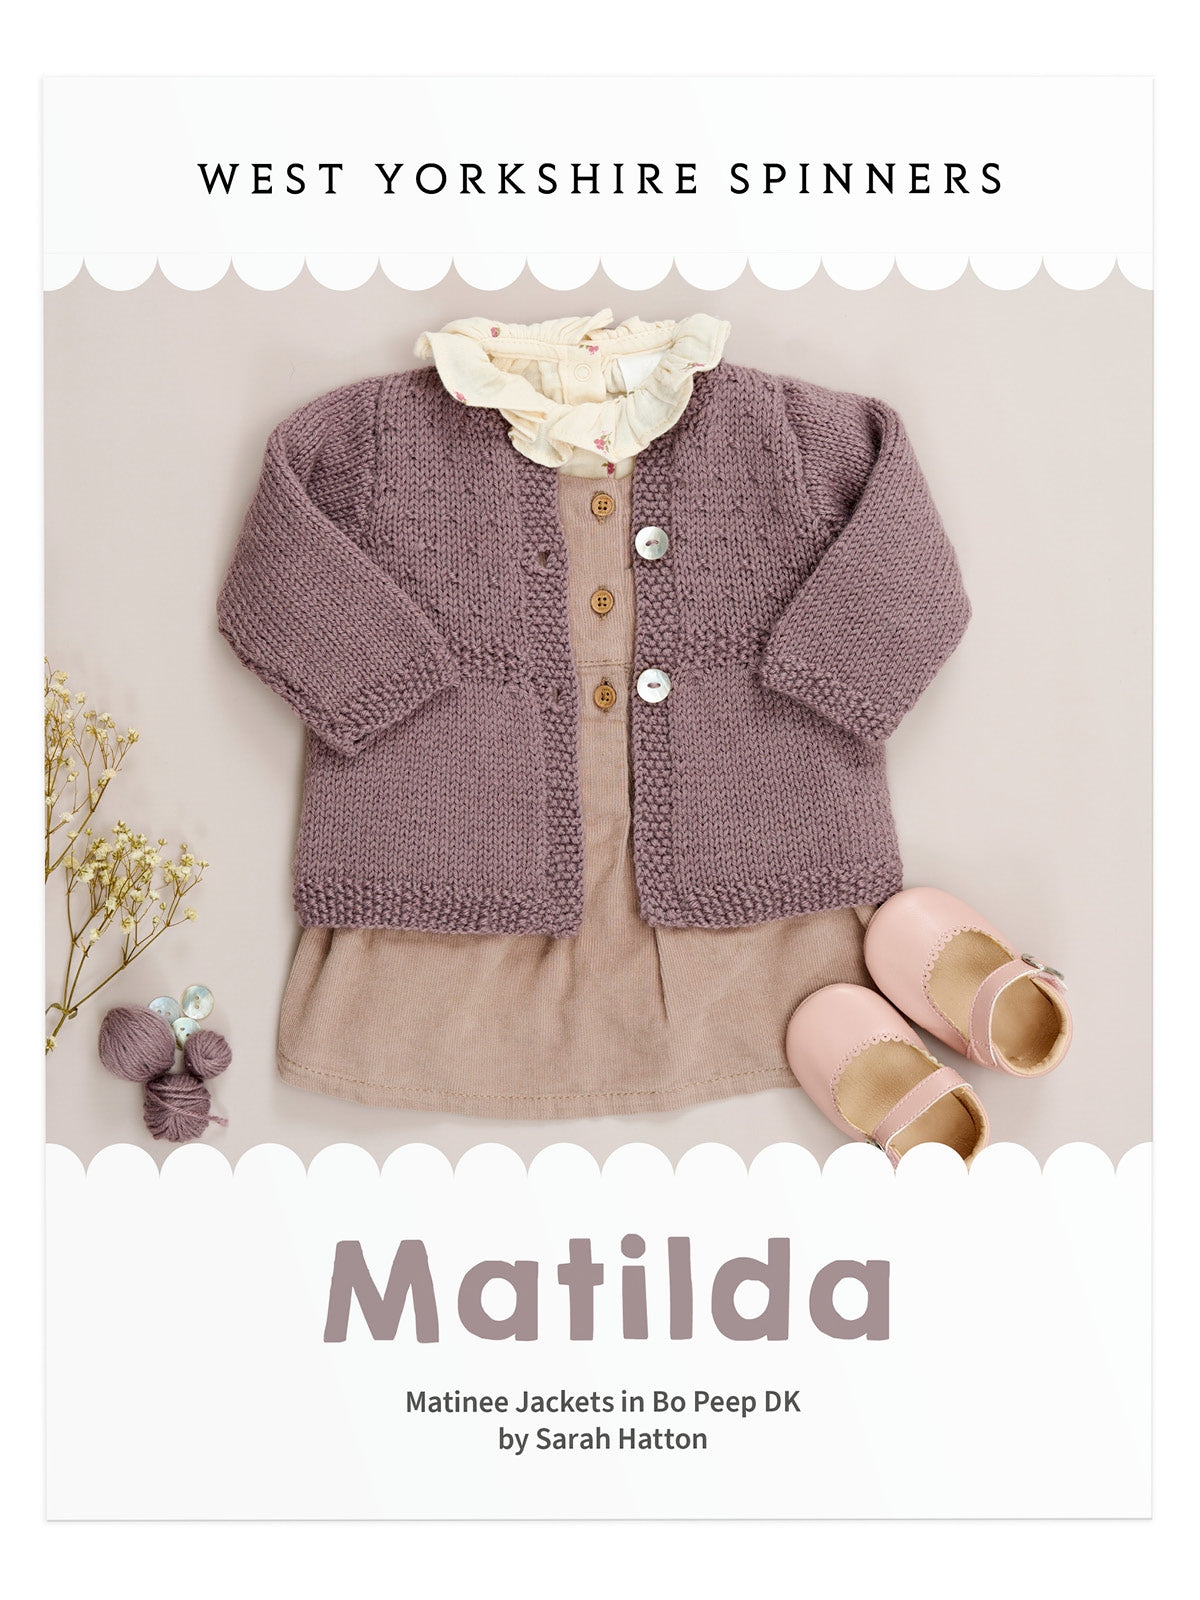 WYS Matilda: Matinee Jackets in Bo Peep DK by Sarah Hatton - Knitting Kit